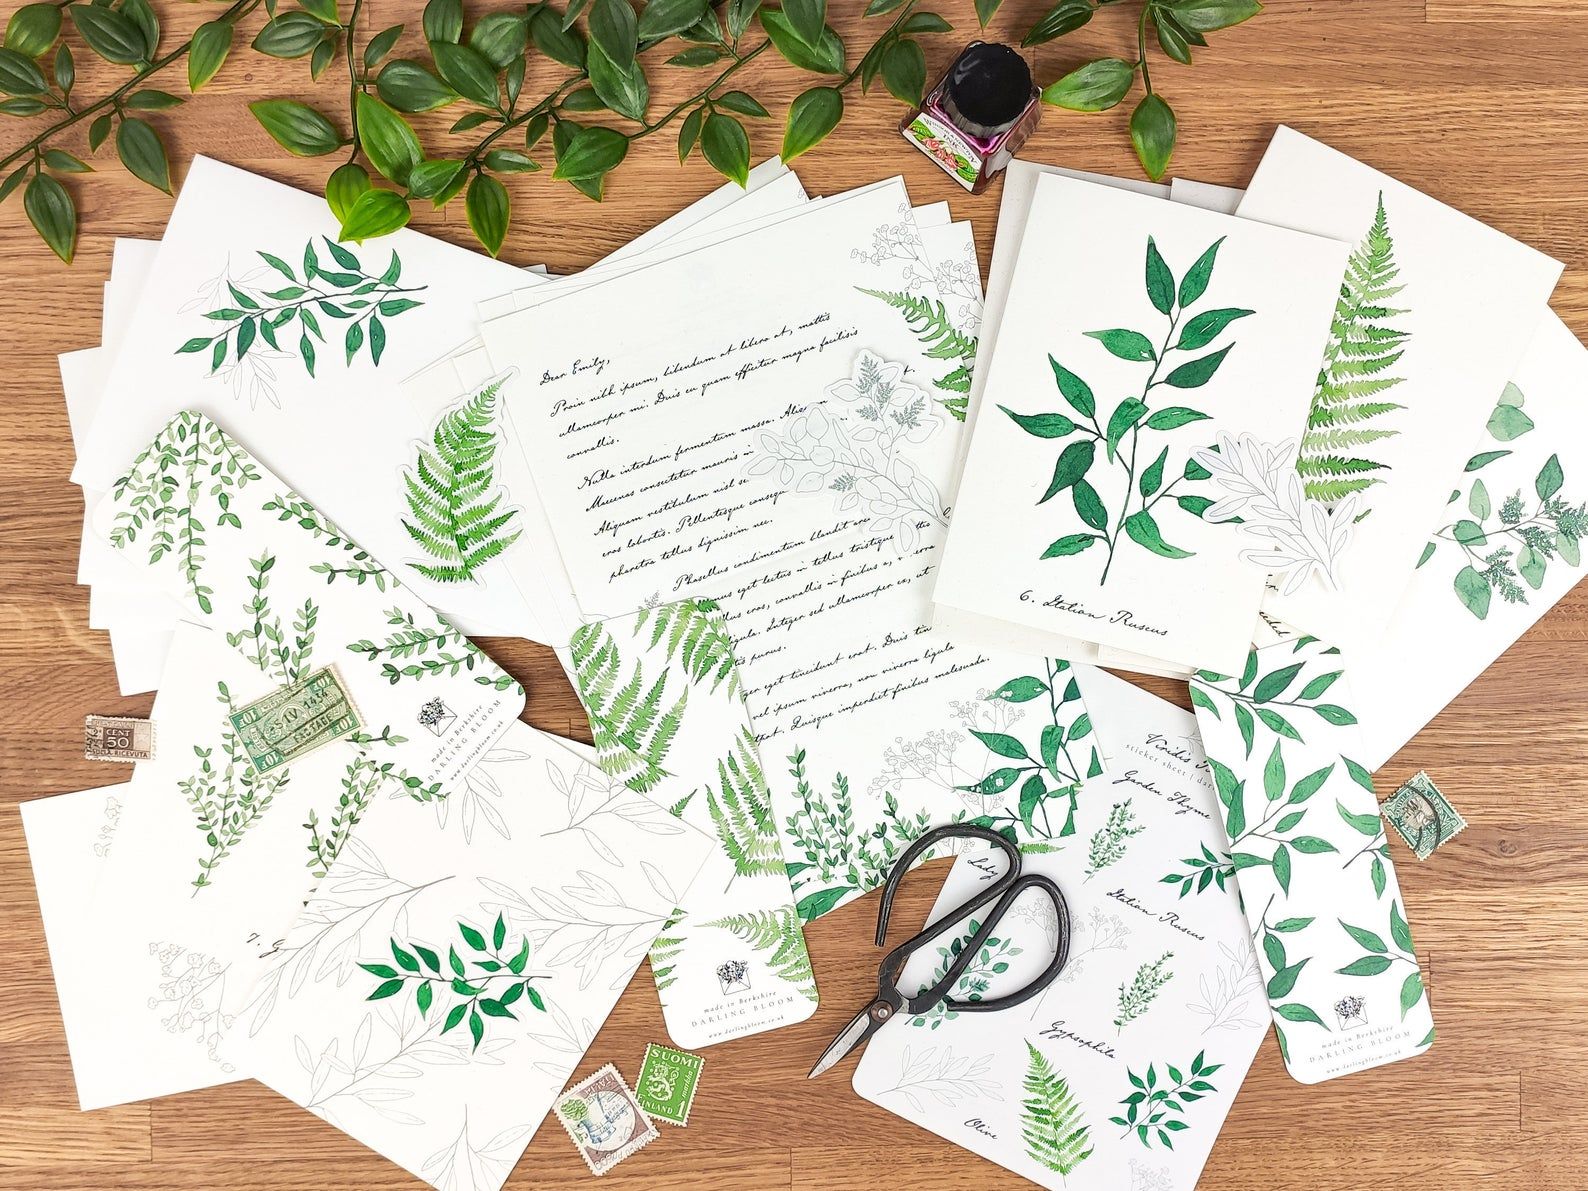 Leaf-printed paper and envelopes. 